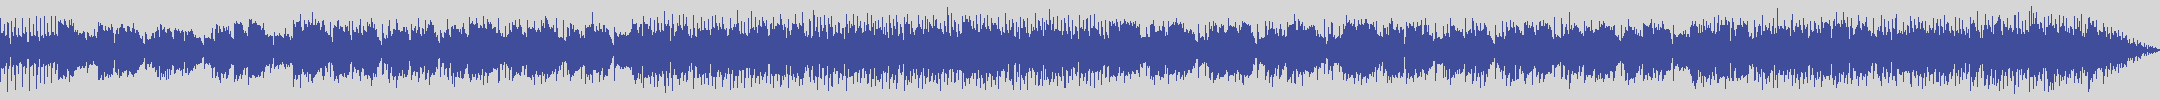 digiphonic_records [DPR008] Salvatore Adamo - Solo [Original Mix] audio wave form